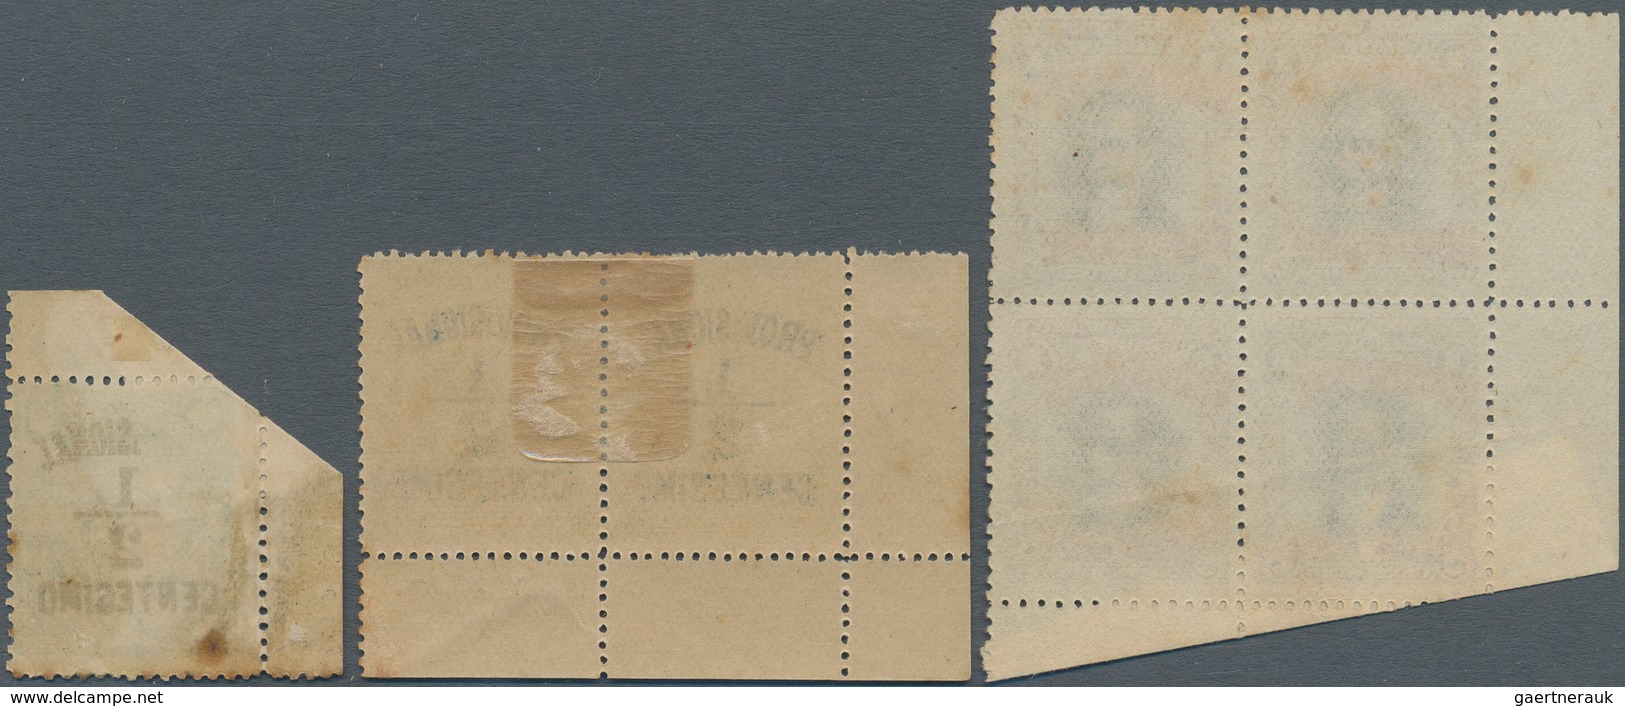 Uruguay: 1898, Provisional Overprints, Lot Of 13 Stamps Incl. Overprint On Debris, Shifted/divided O - Uruguay